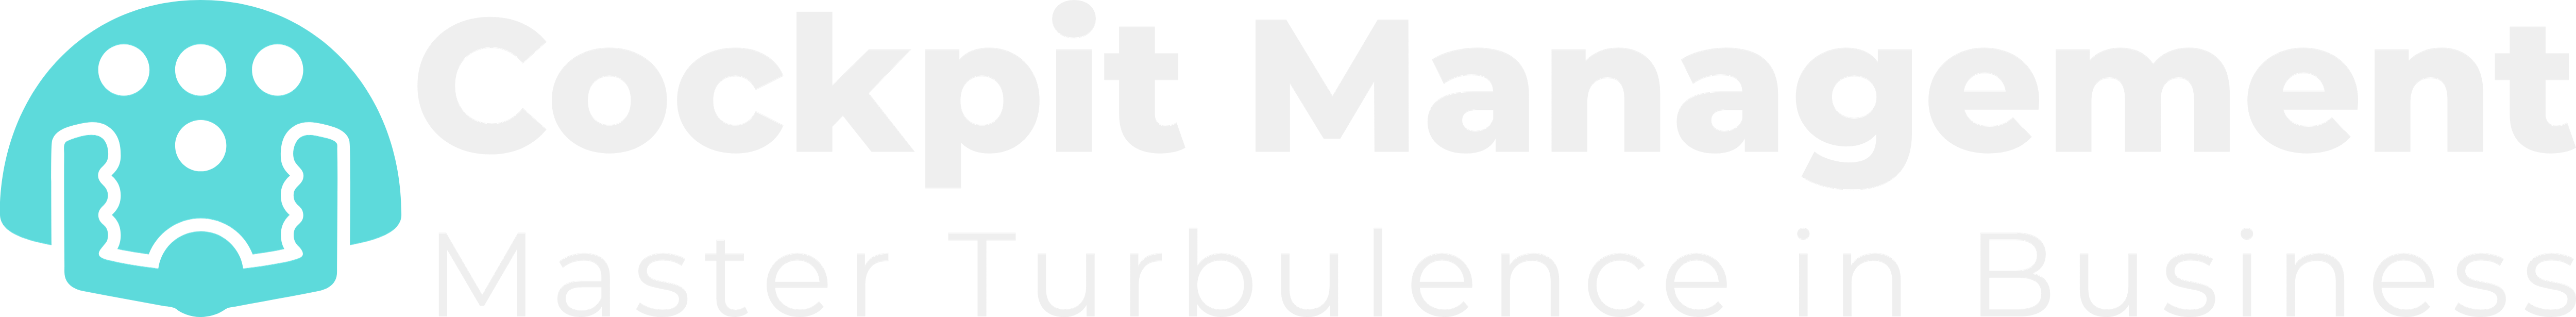 Cockpit Management Logo